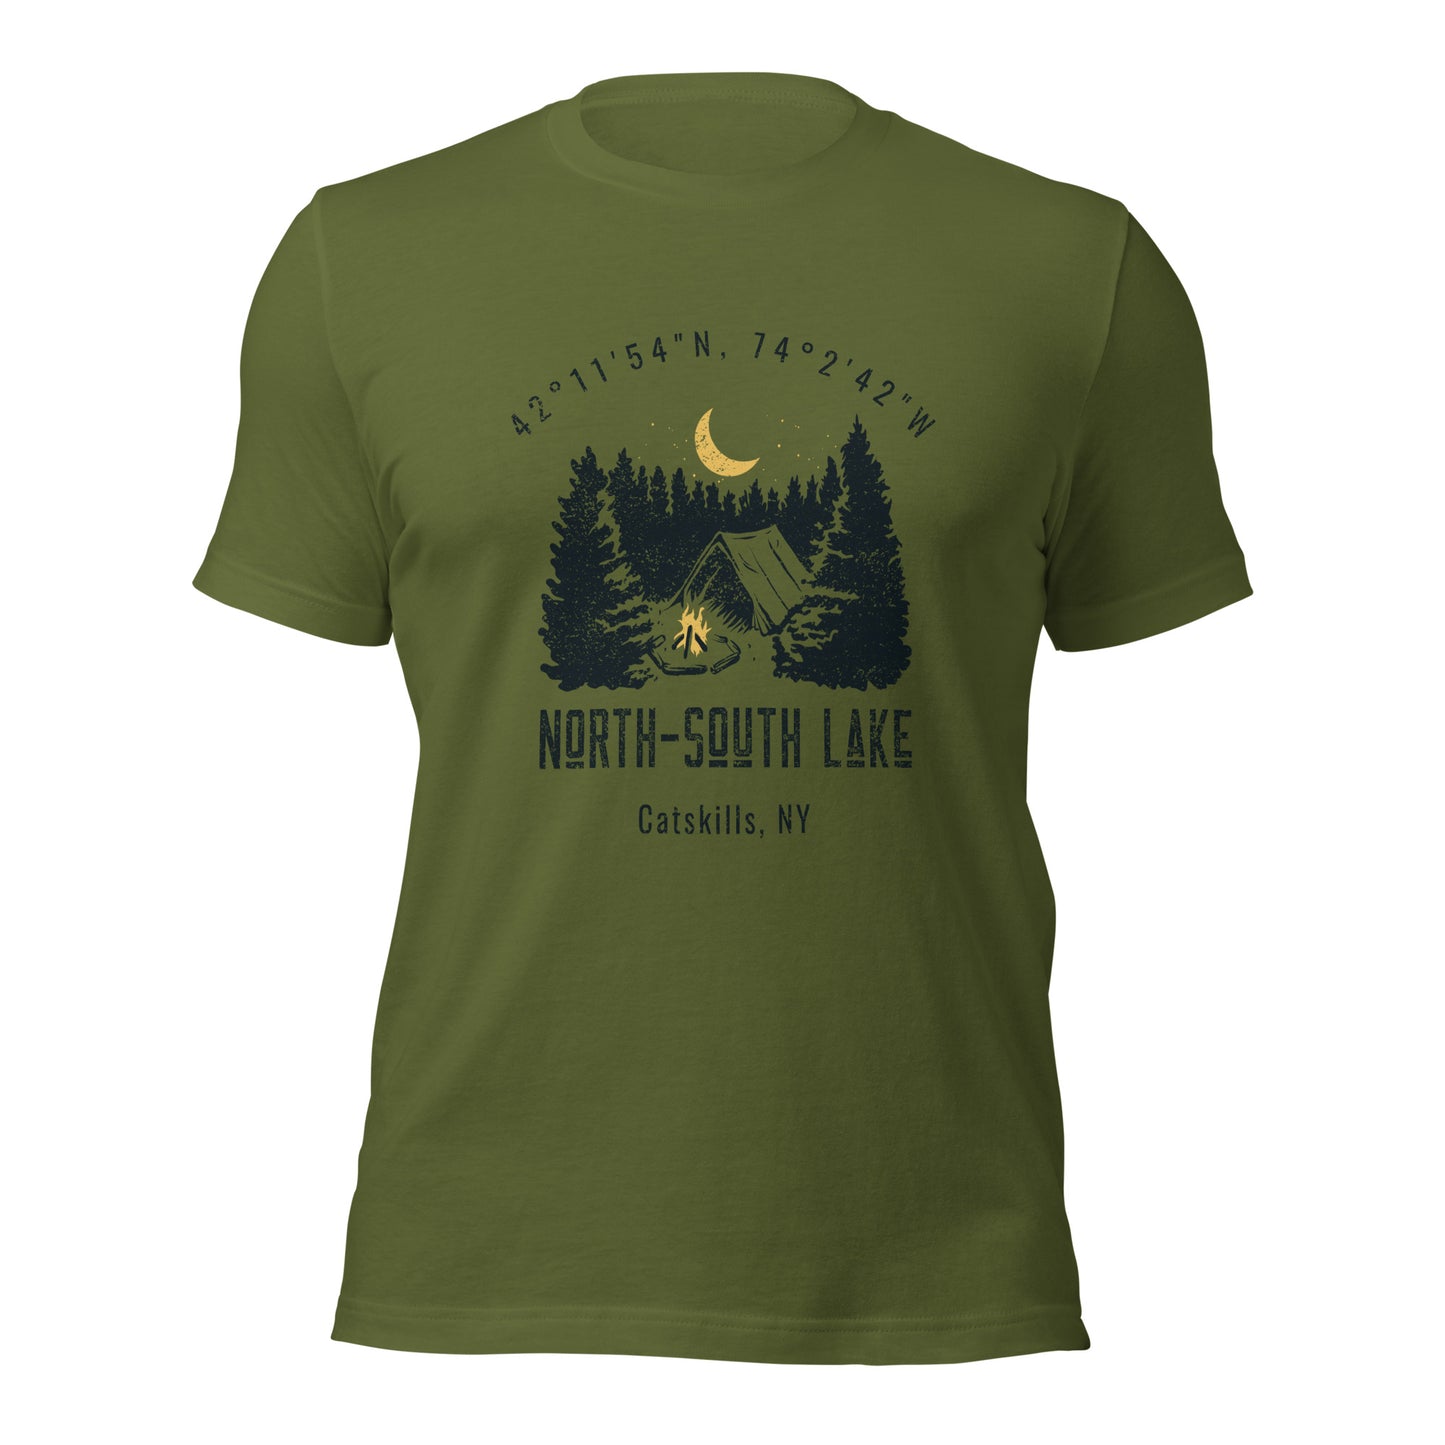 North-South Lake T-Shirt - Unisex